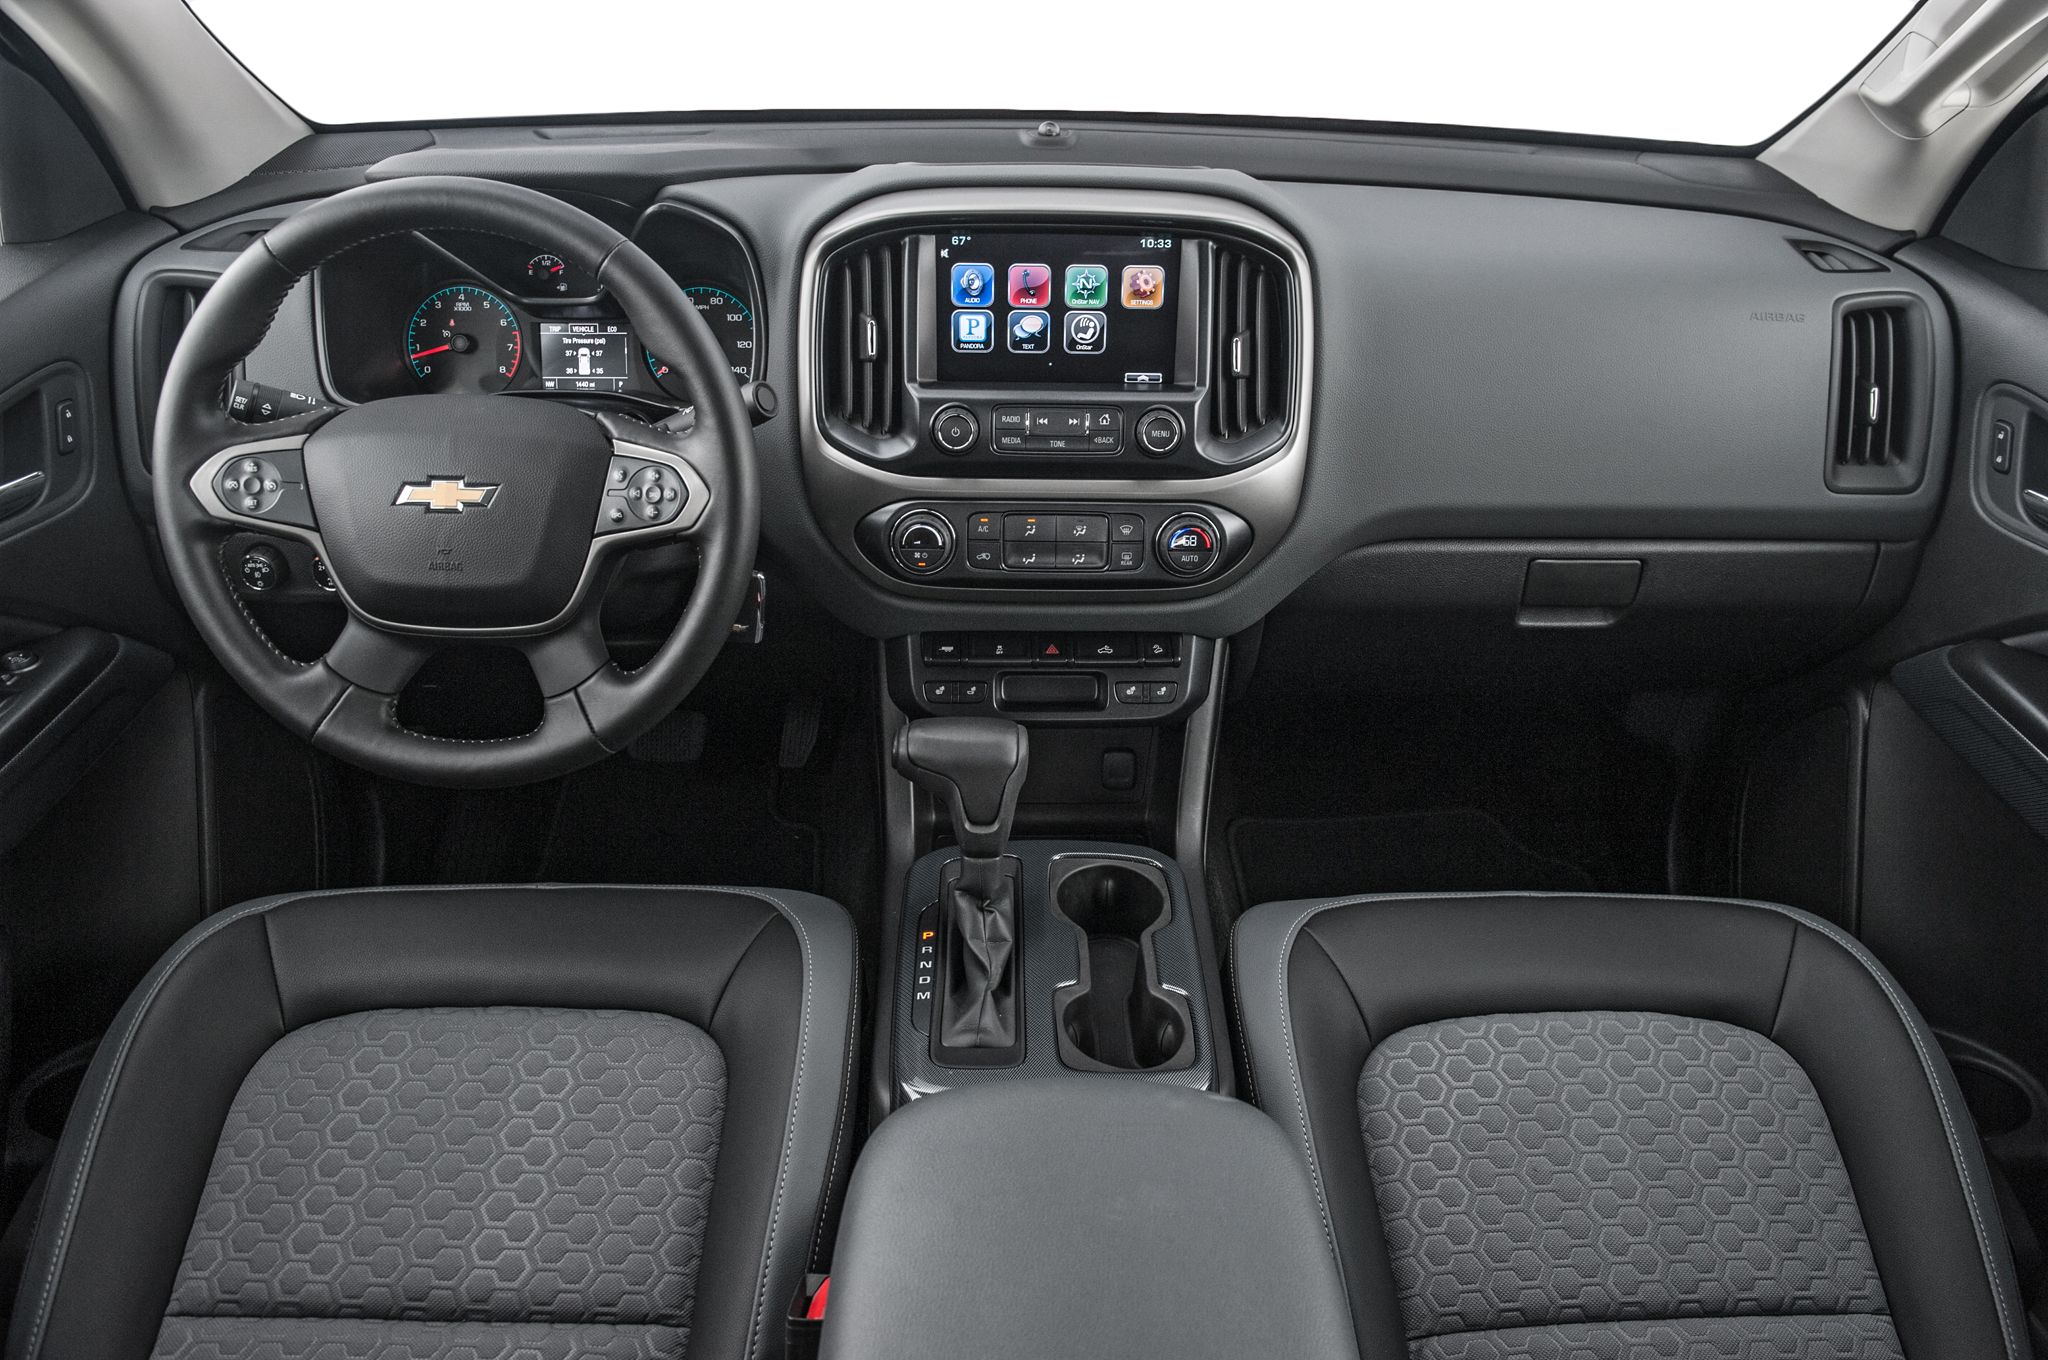 2015 Chevrolet Colorado Dashboard And Interior (View 3 of 8)